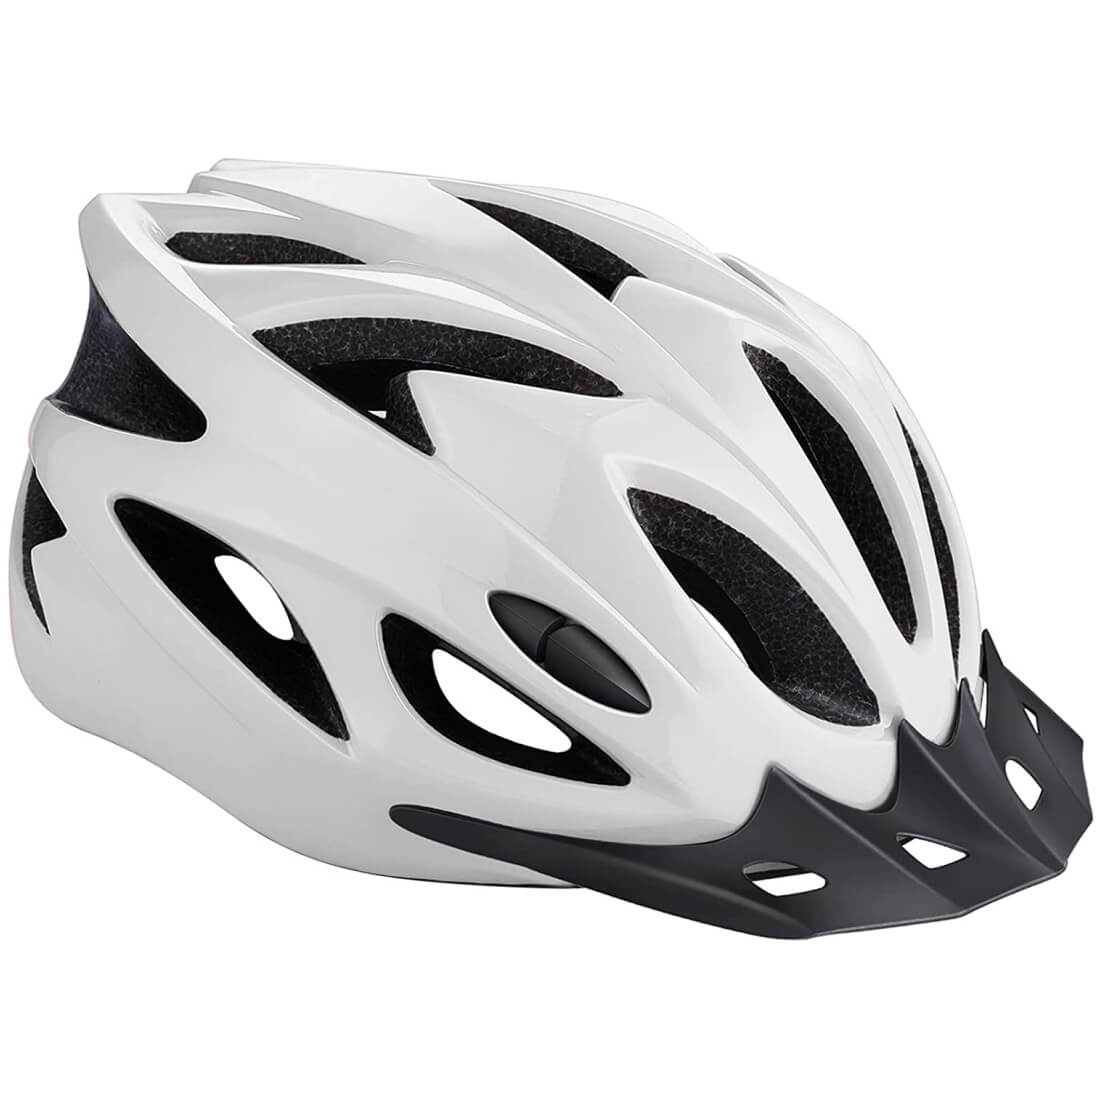 Replacement Pads Adjustable Bike Helmets 02